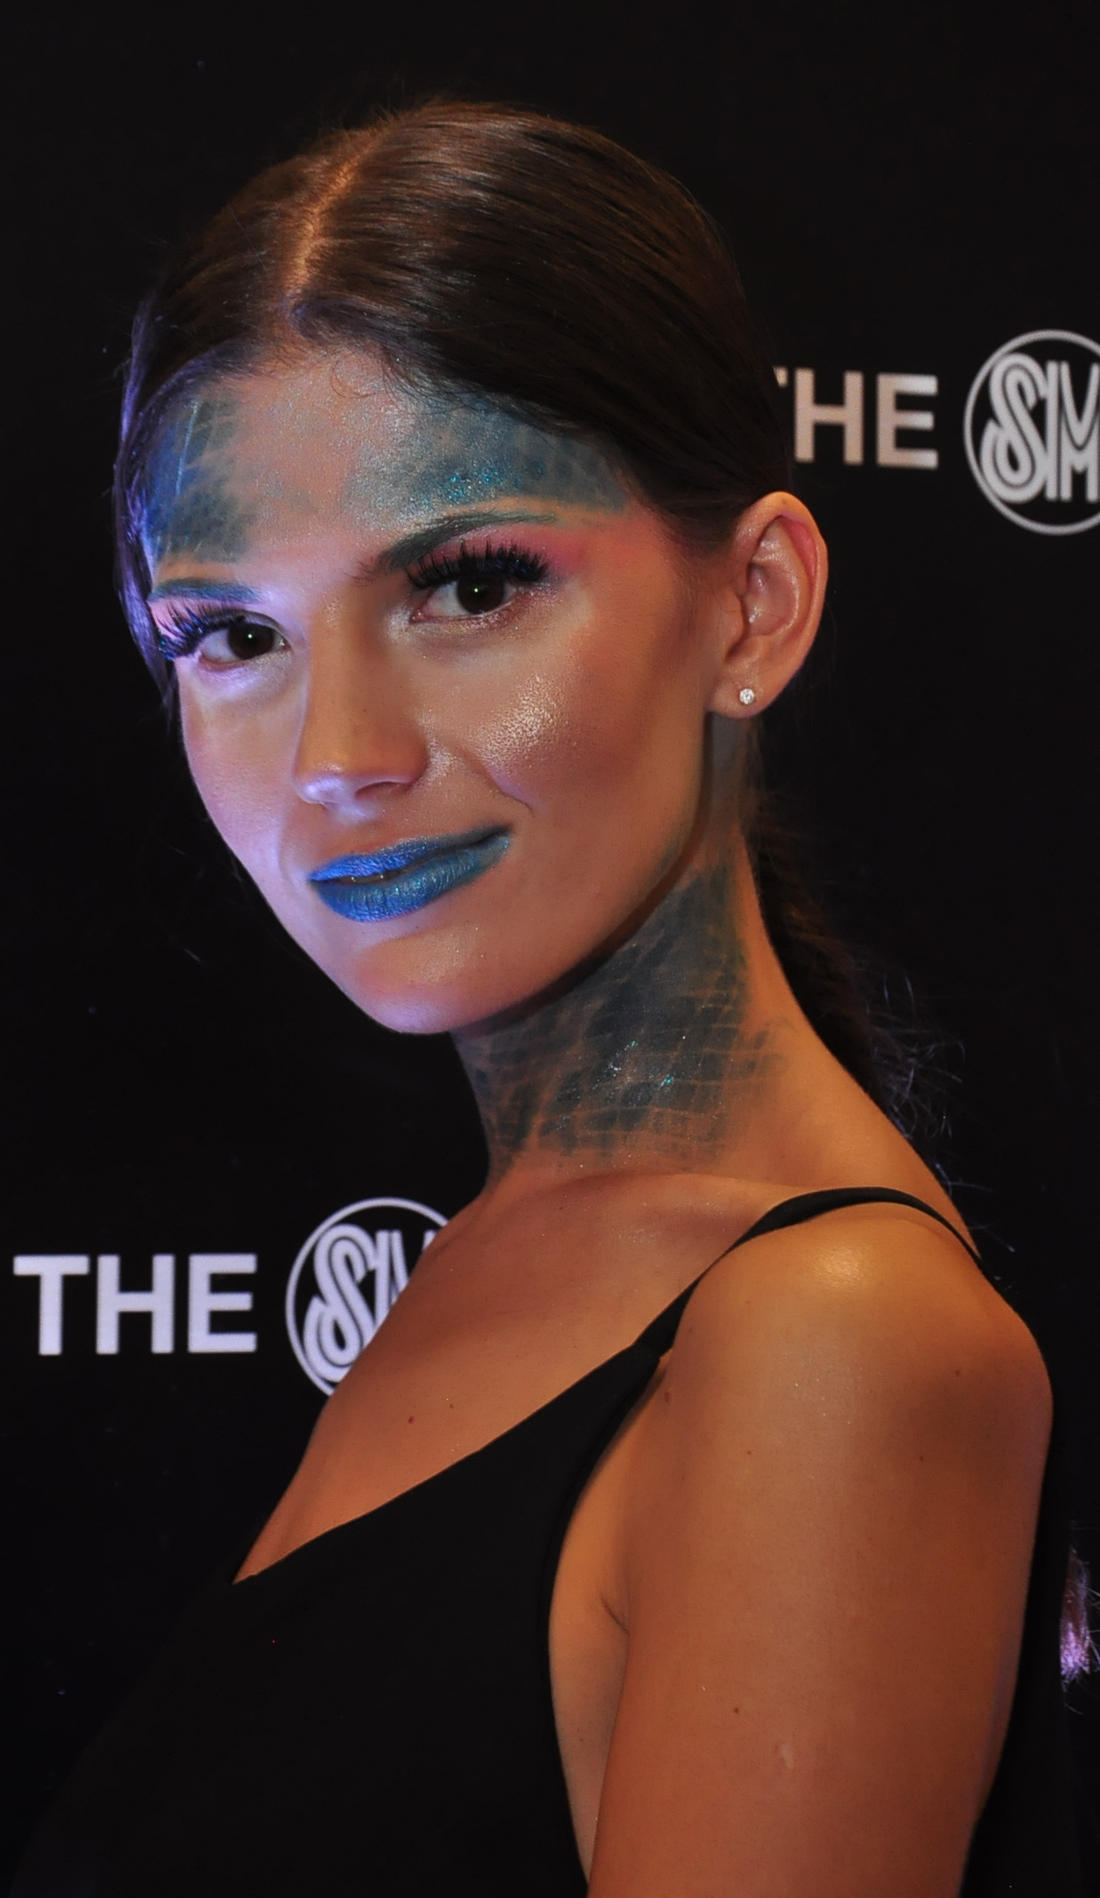 Filipino makeup masters reveal top 3